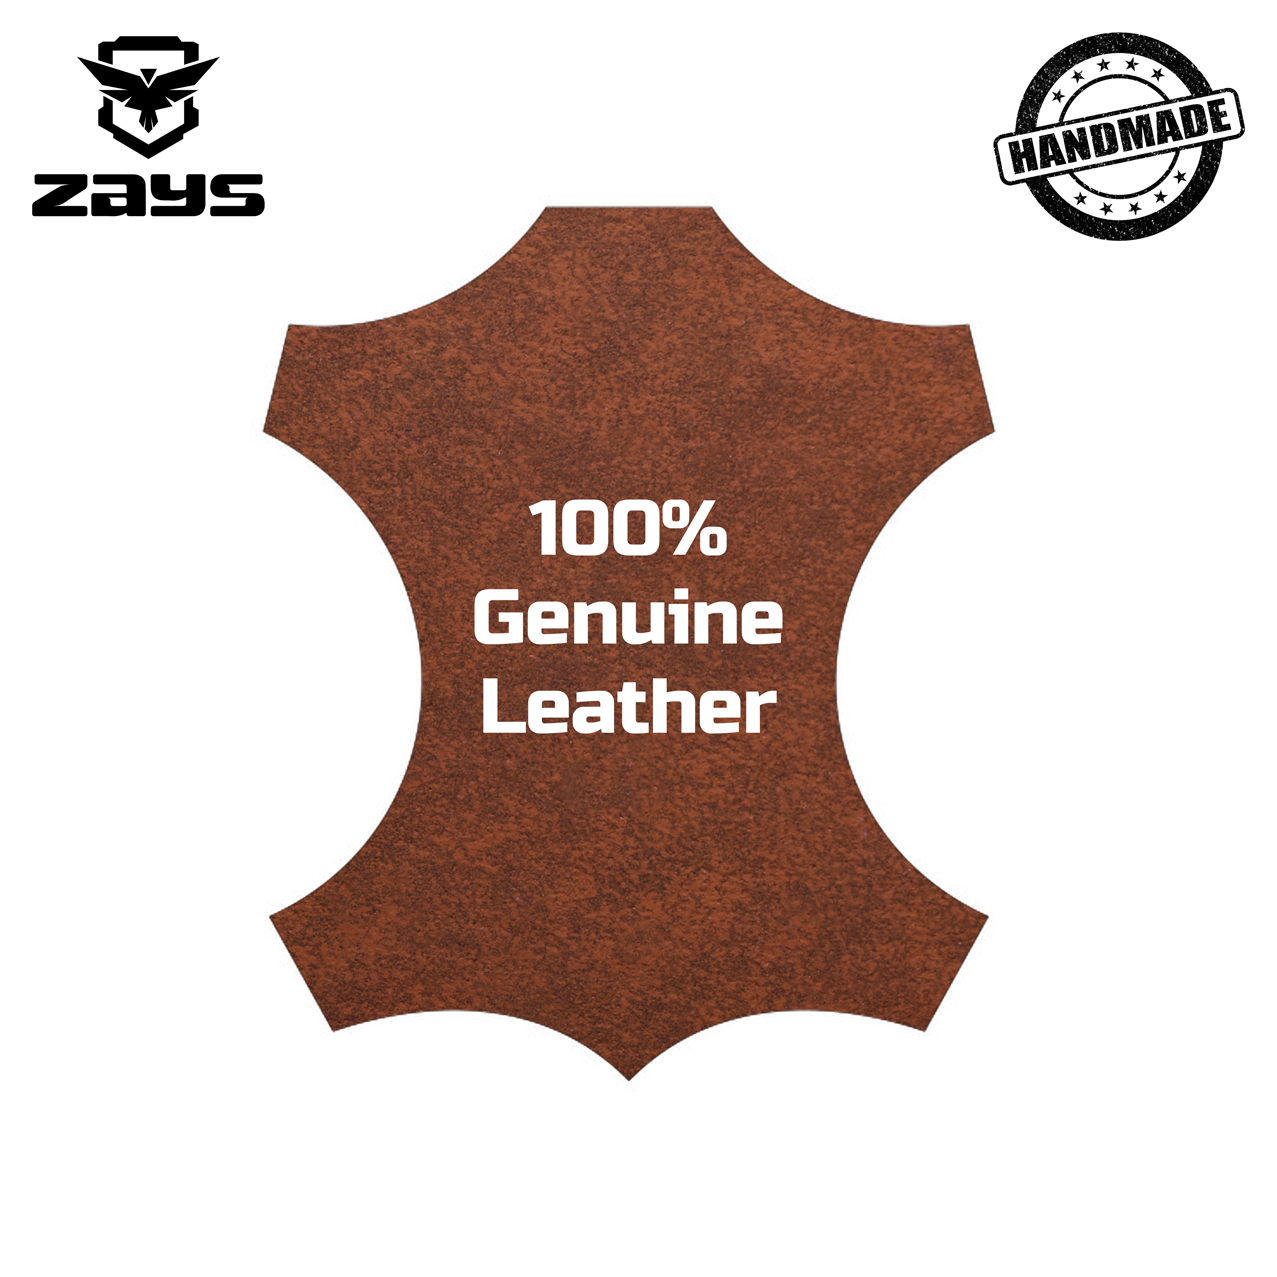 Zays Leather Premium Formal Shoe For Men (Brown) - ZAYSSF26